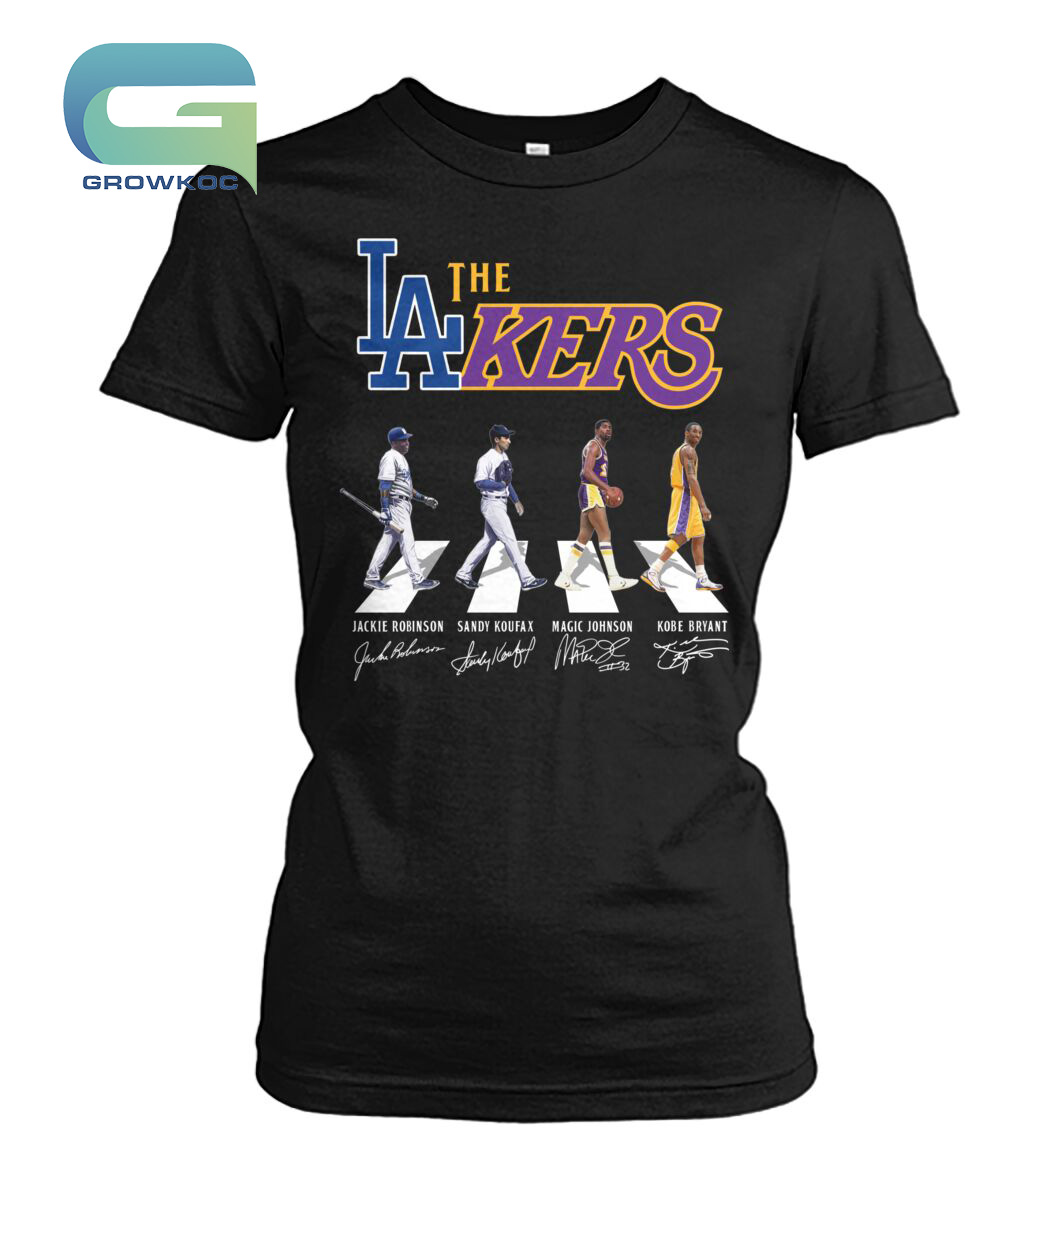 Kobe Bryant Shirt Lakers NBA - Trends Bedding